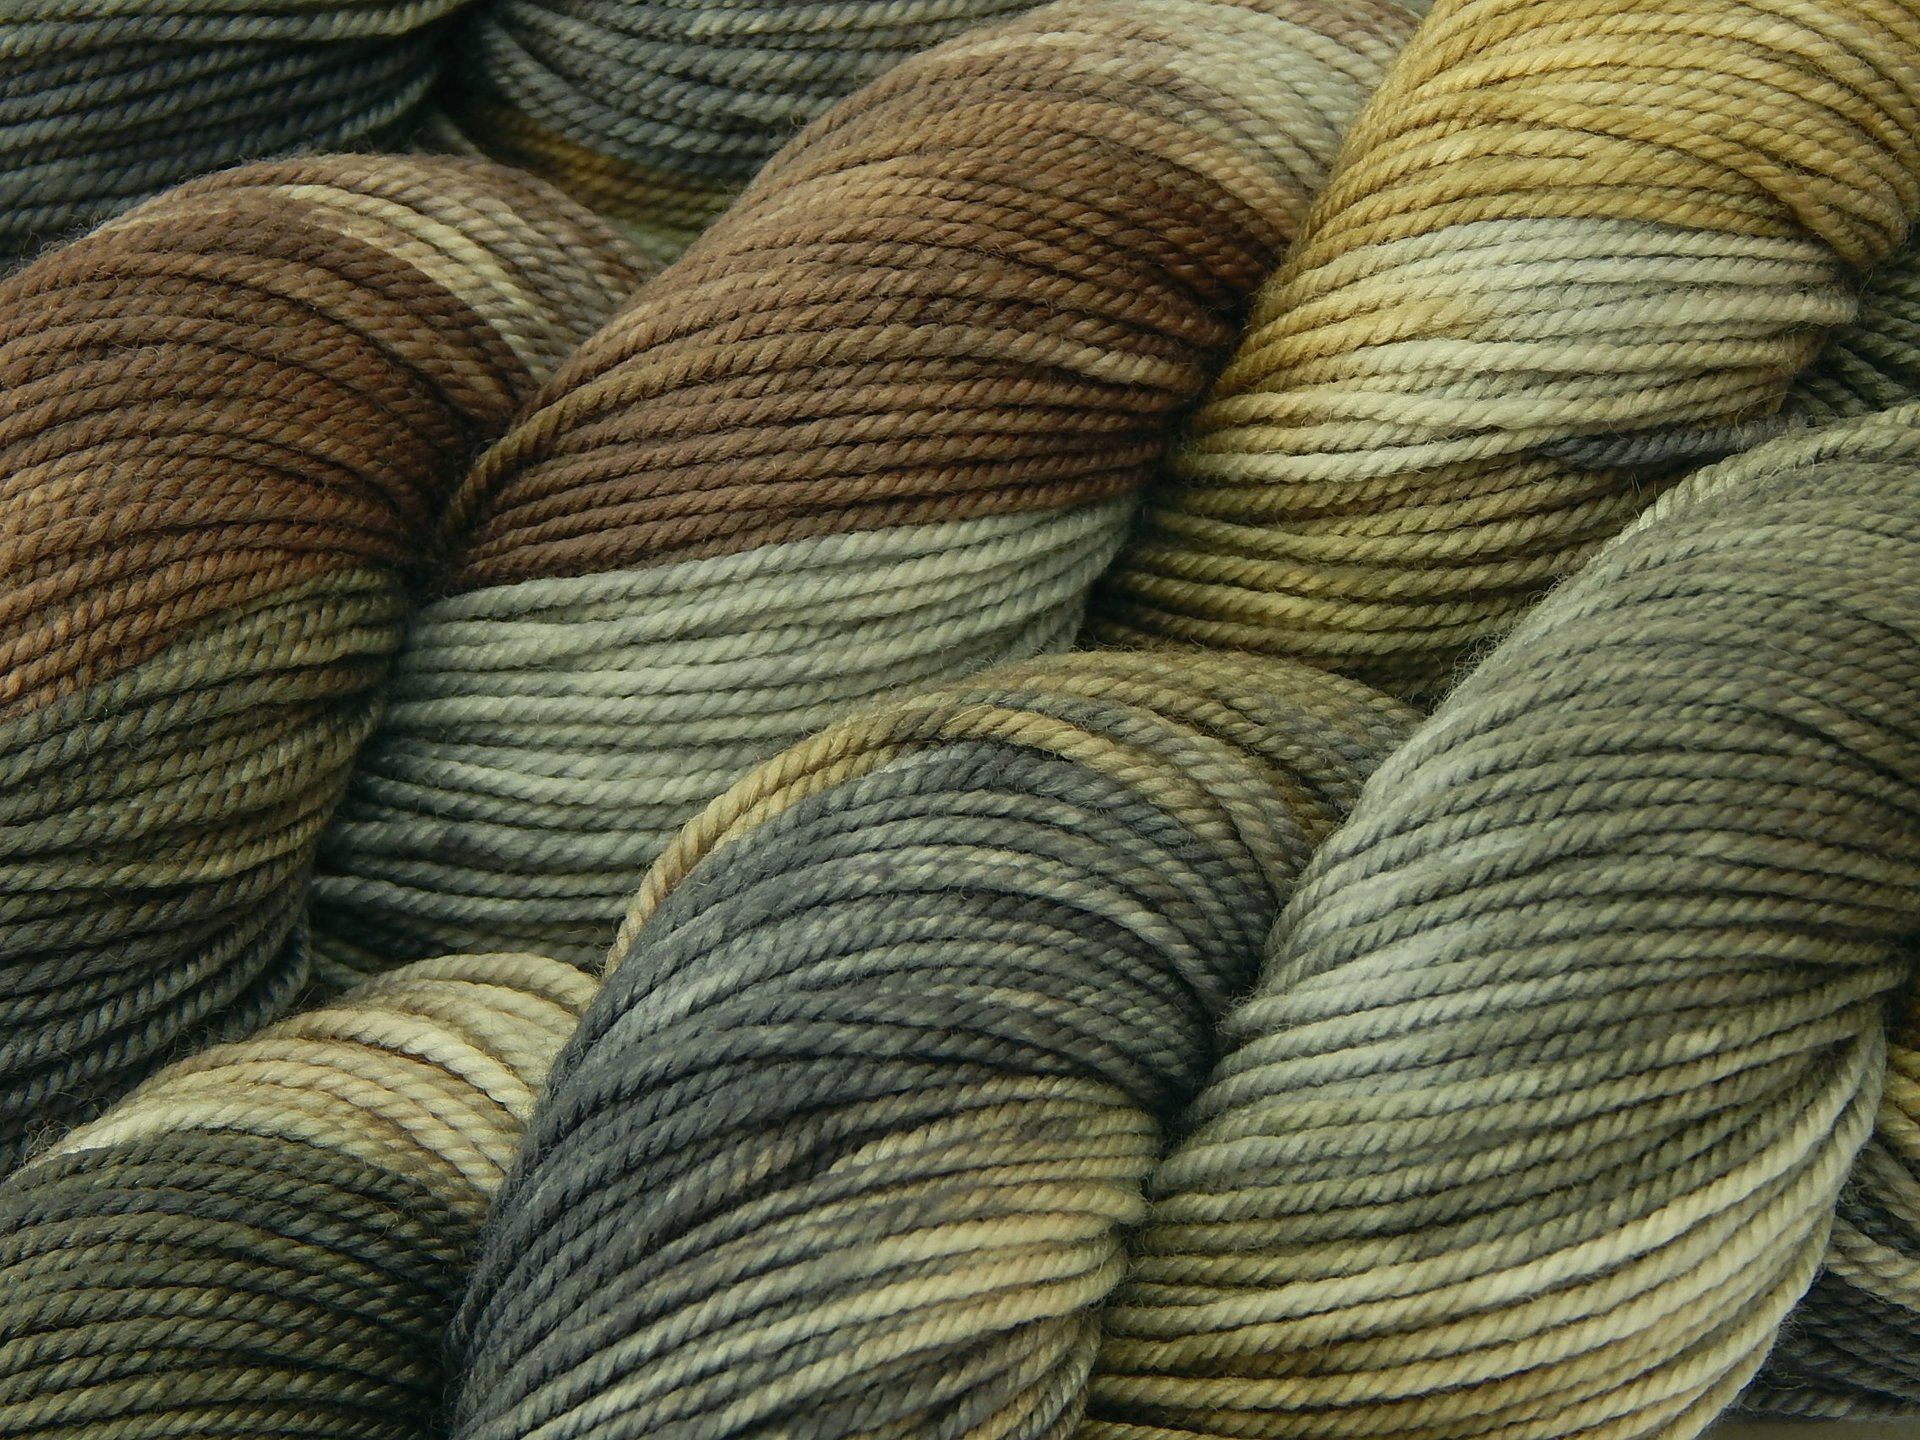 Hand Dyed Yarn, Sport Weight Superwash Merino Wool - Potluck Greys & Browns - Indie Dyed Silver Gray Khaki Knitting Yarn, Earthy Colors Heavier Sock Yarn 